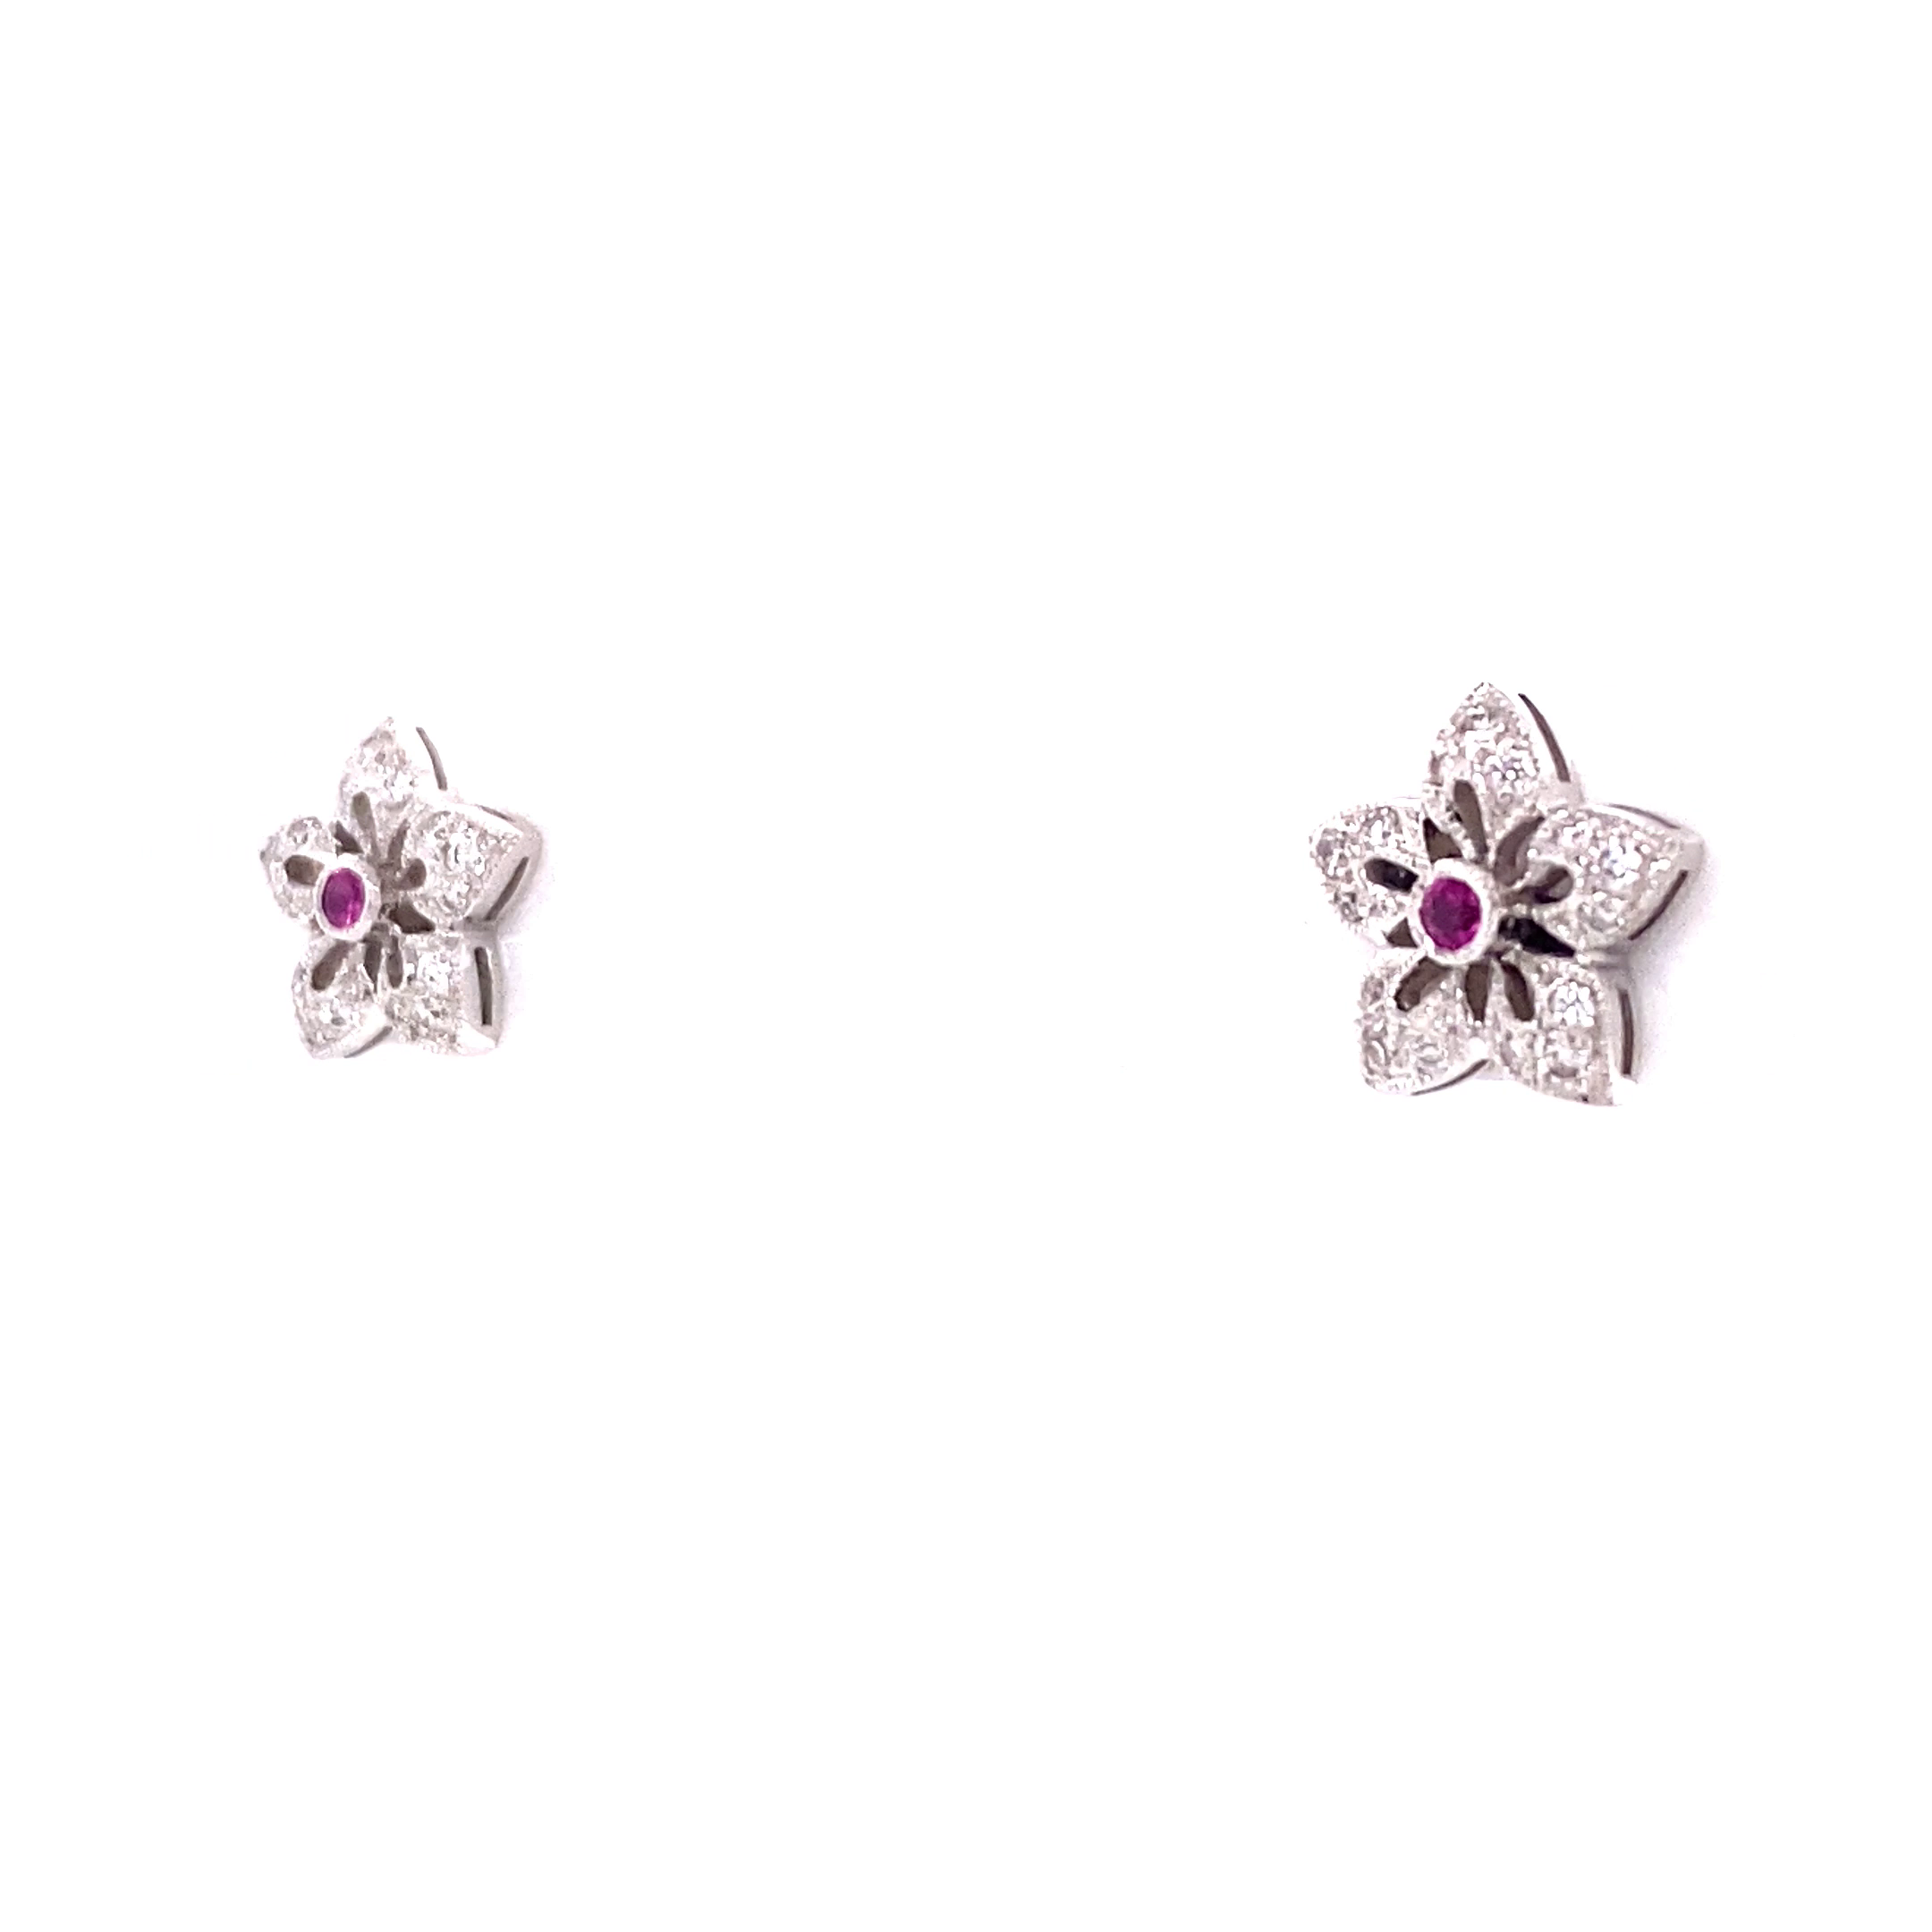 18KW Ruby & Diamonds Floral Fashion Earrings